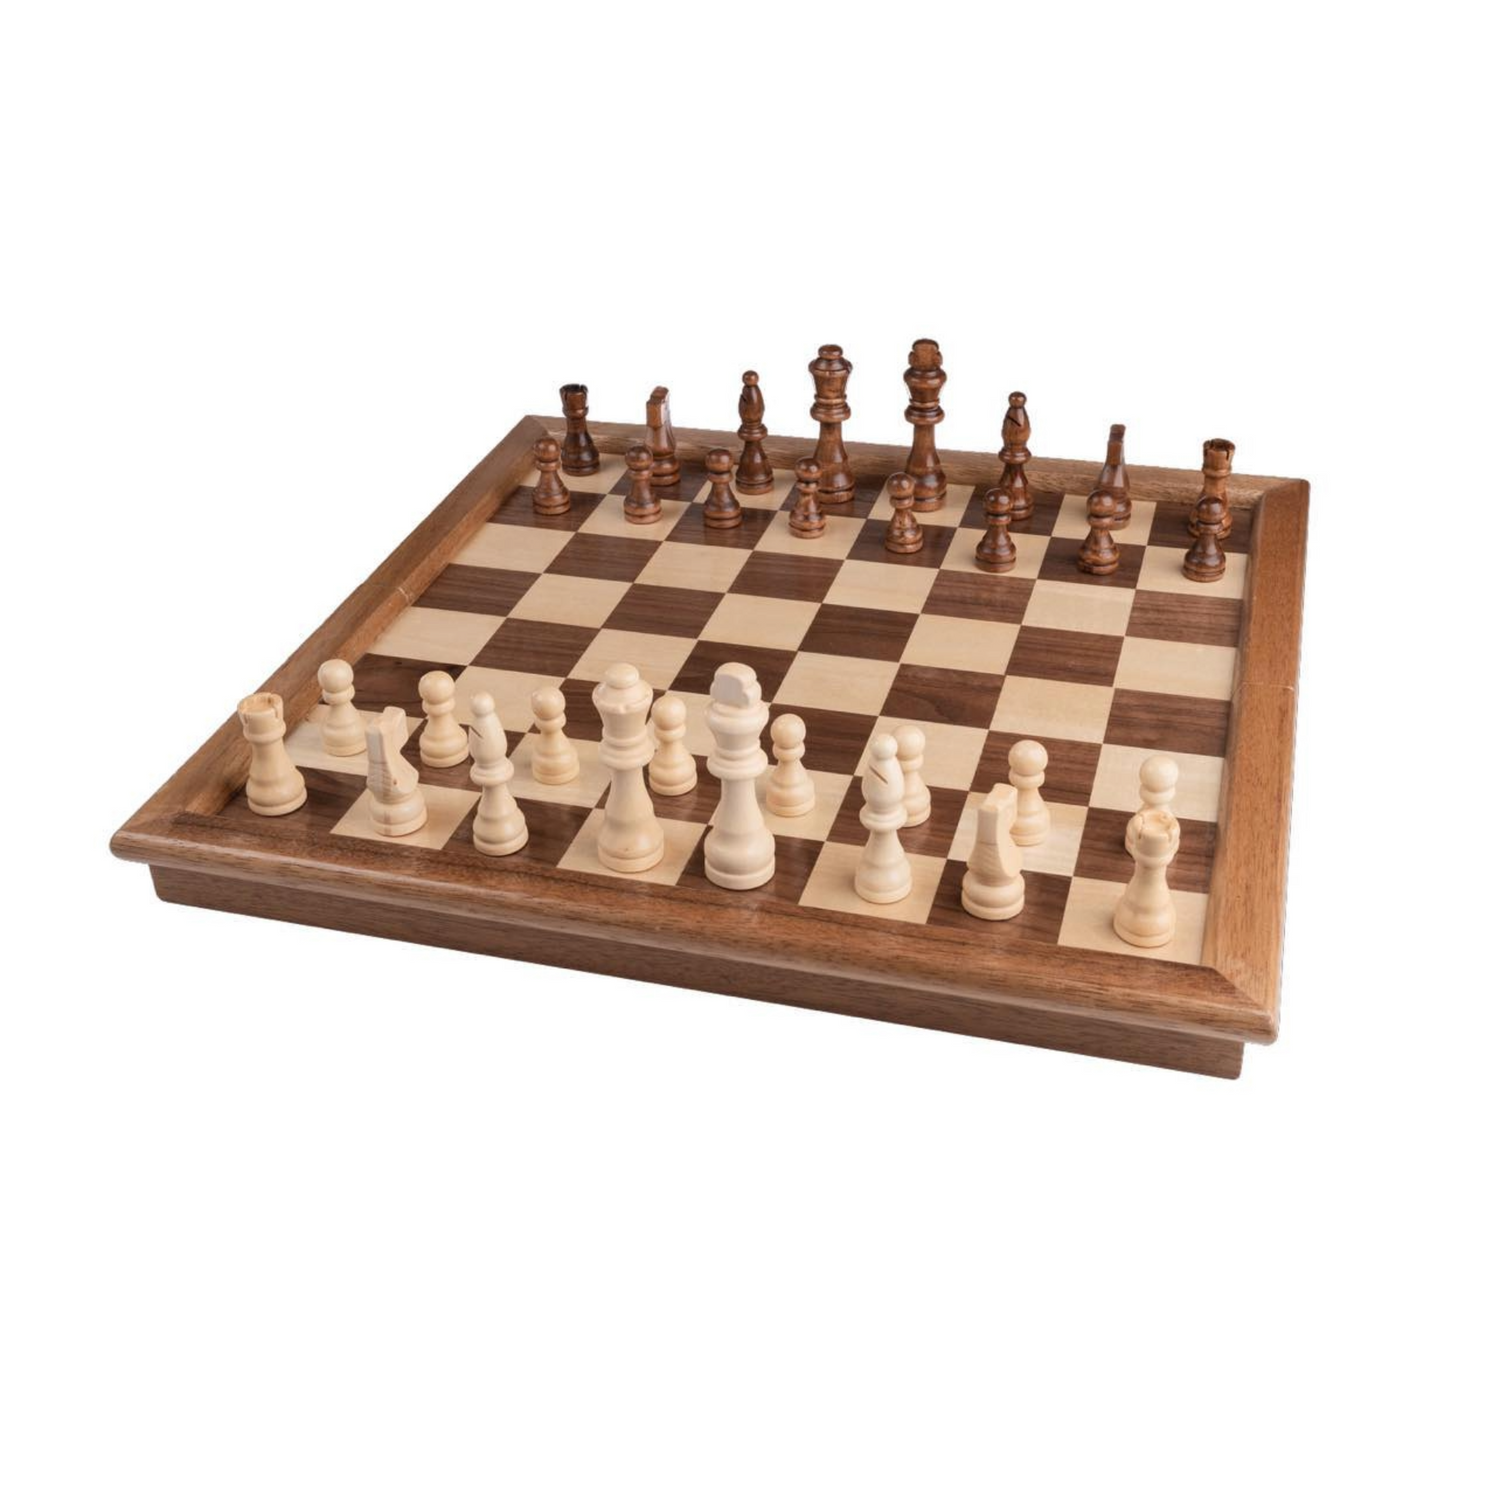 Inlaid Chess Board 40 X 40 Cm 1575 X 1575 